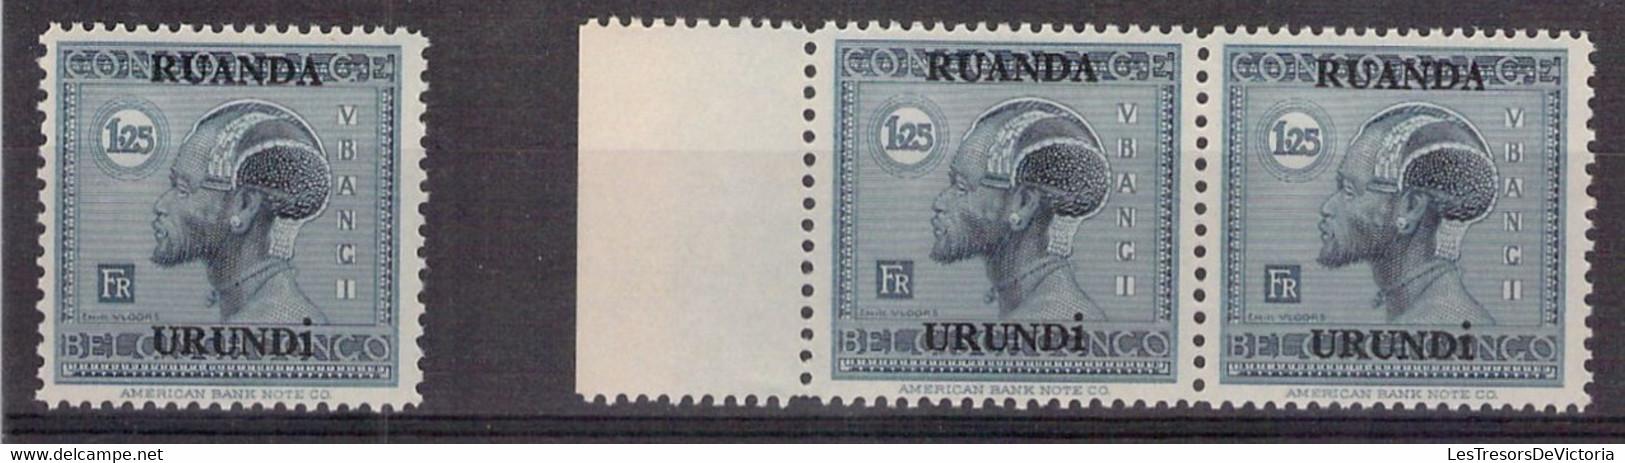 Ruanda Urundi - Lot De 11 COB 73 **MNH 1.25 Bleu Pale - 1925 - Cote 33 COB 2022 - Nuovi